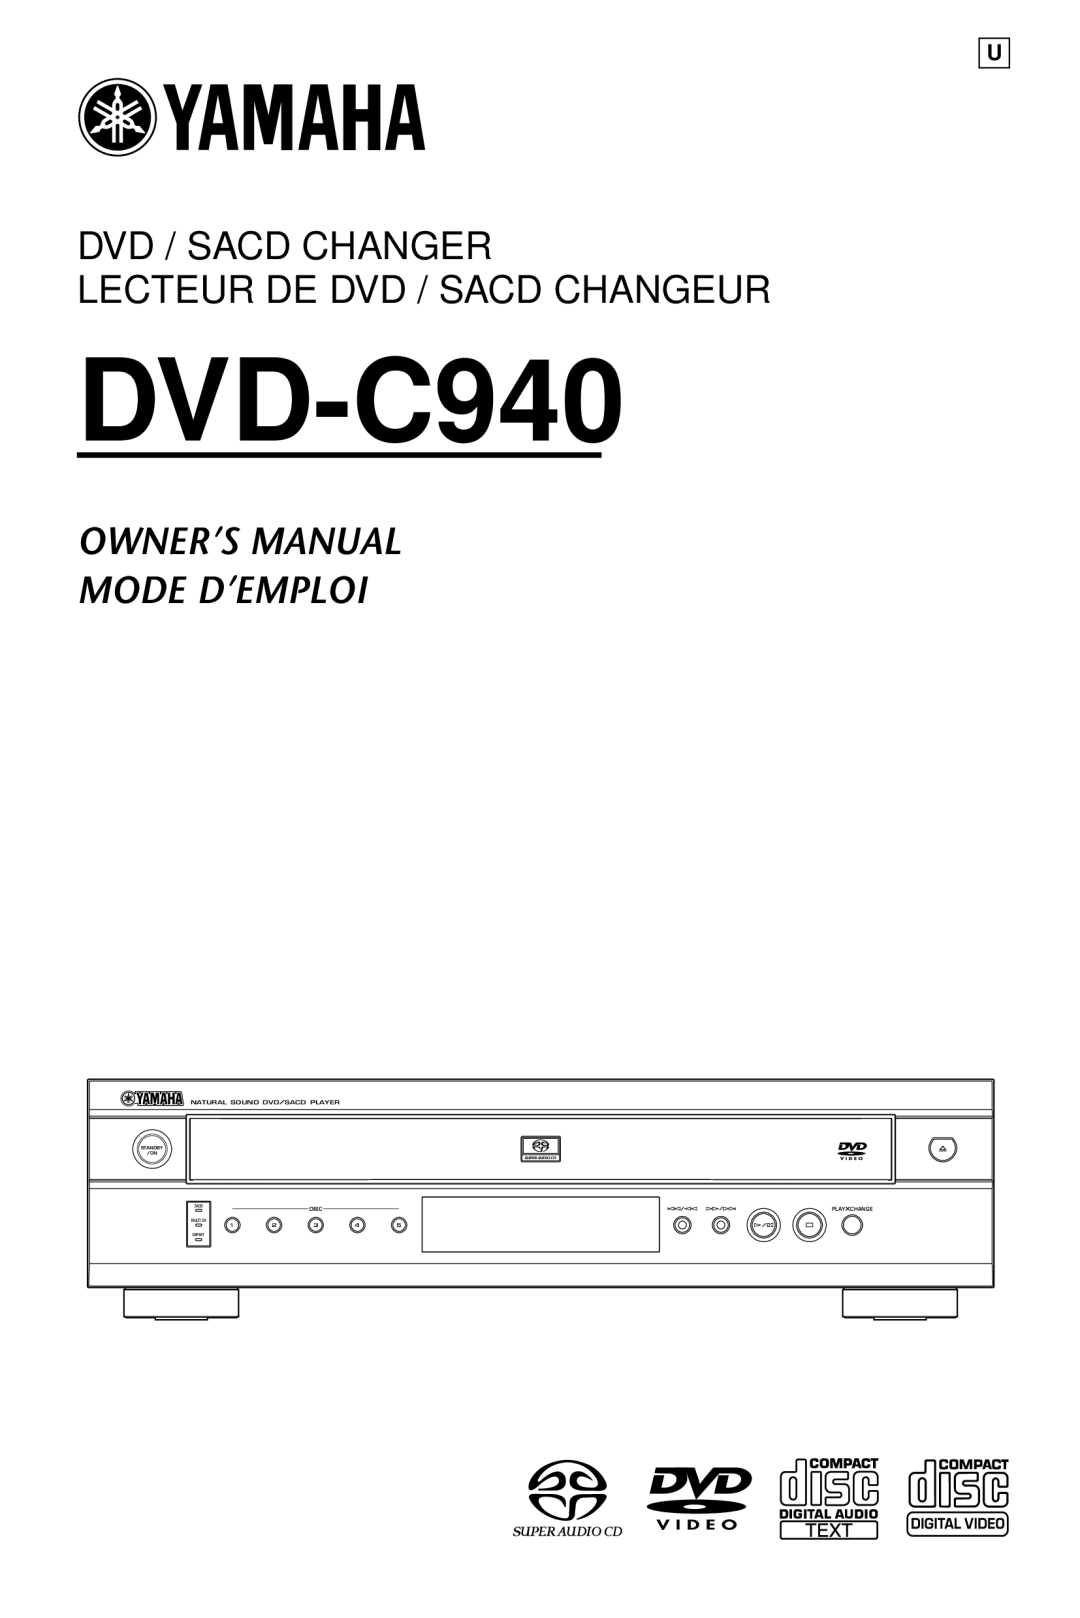 Yamaha DVD-C940 owner manual Dvd / Sacd Changer Lecteur De Dvd / Sacd Changeur, Natural Sound Dvdsacd Player, Play Change 